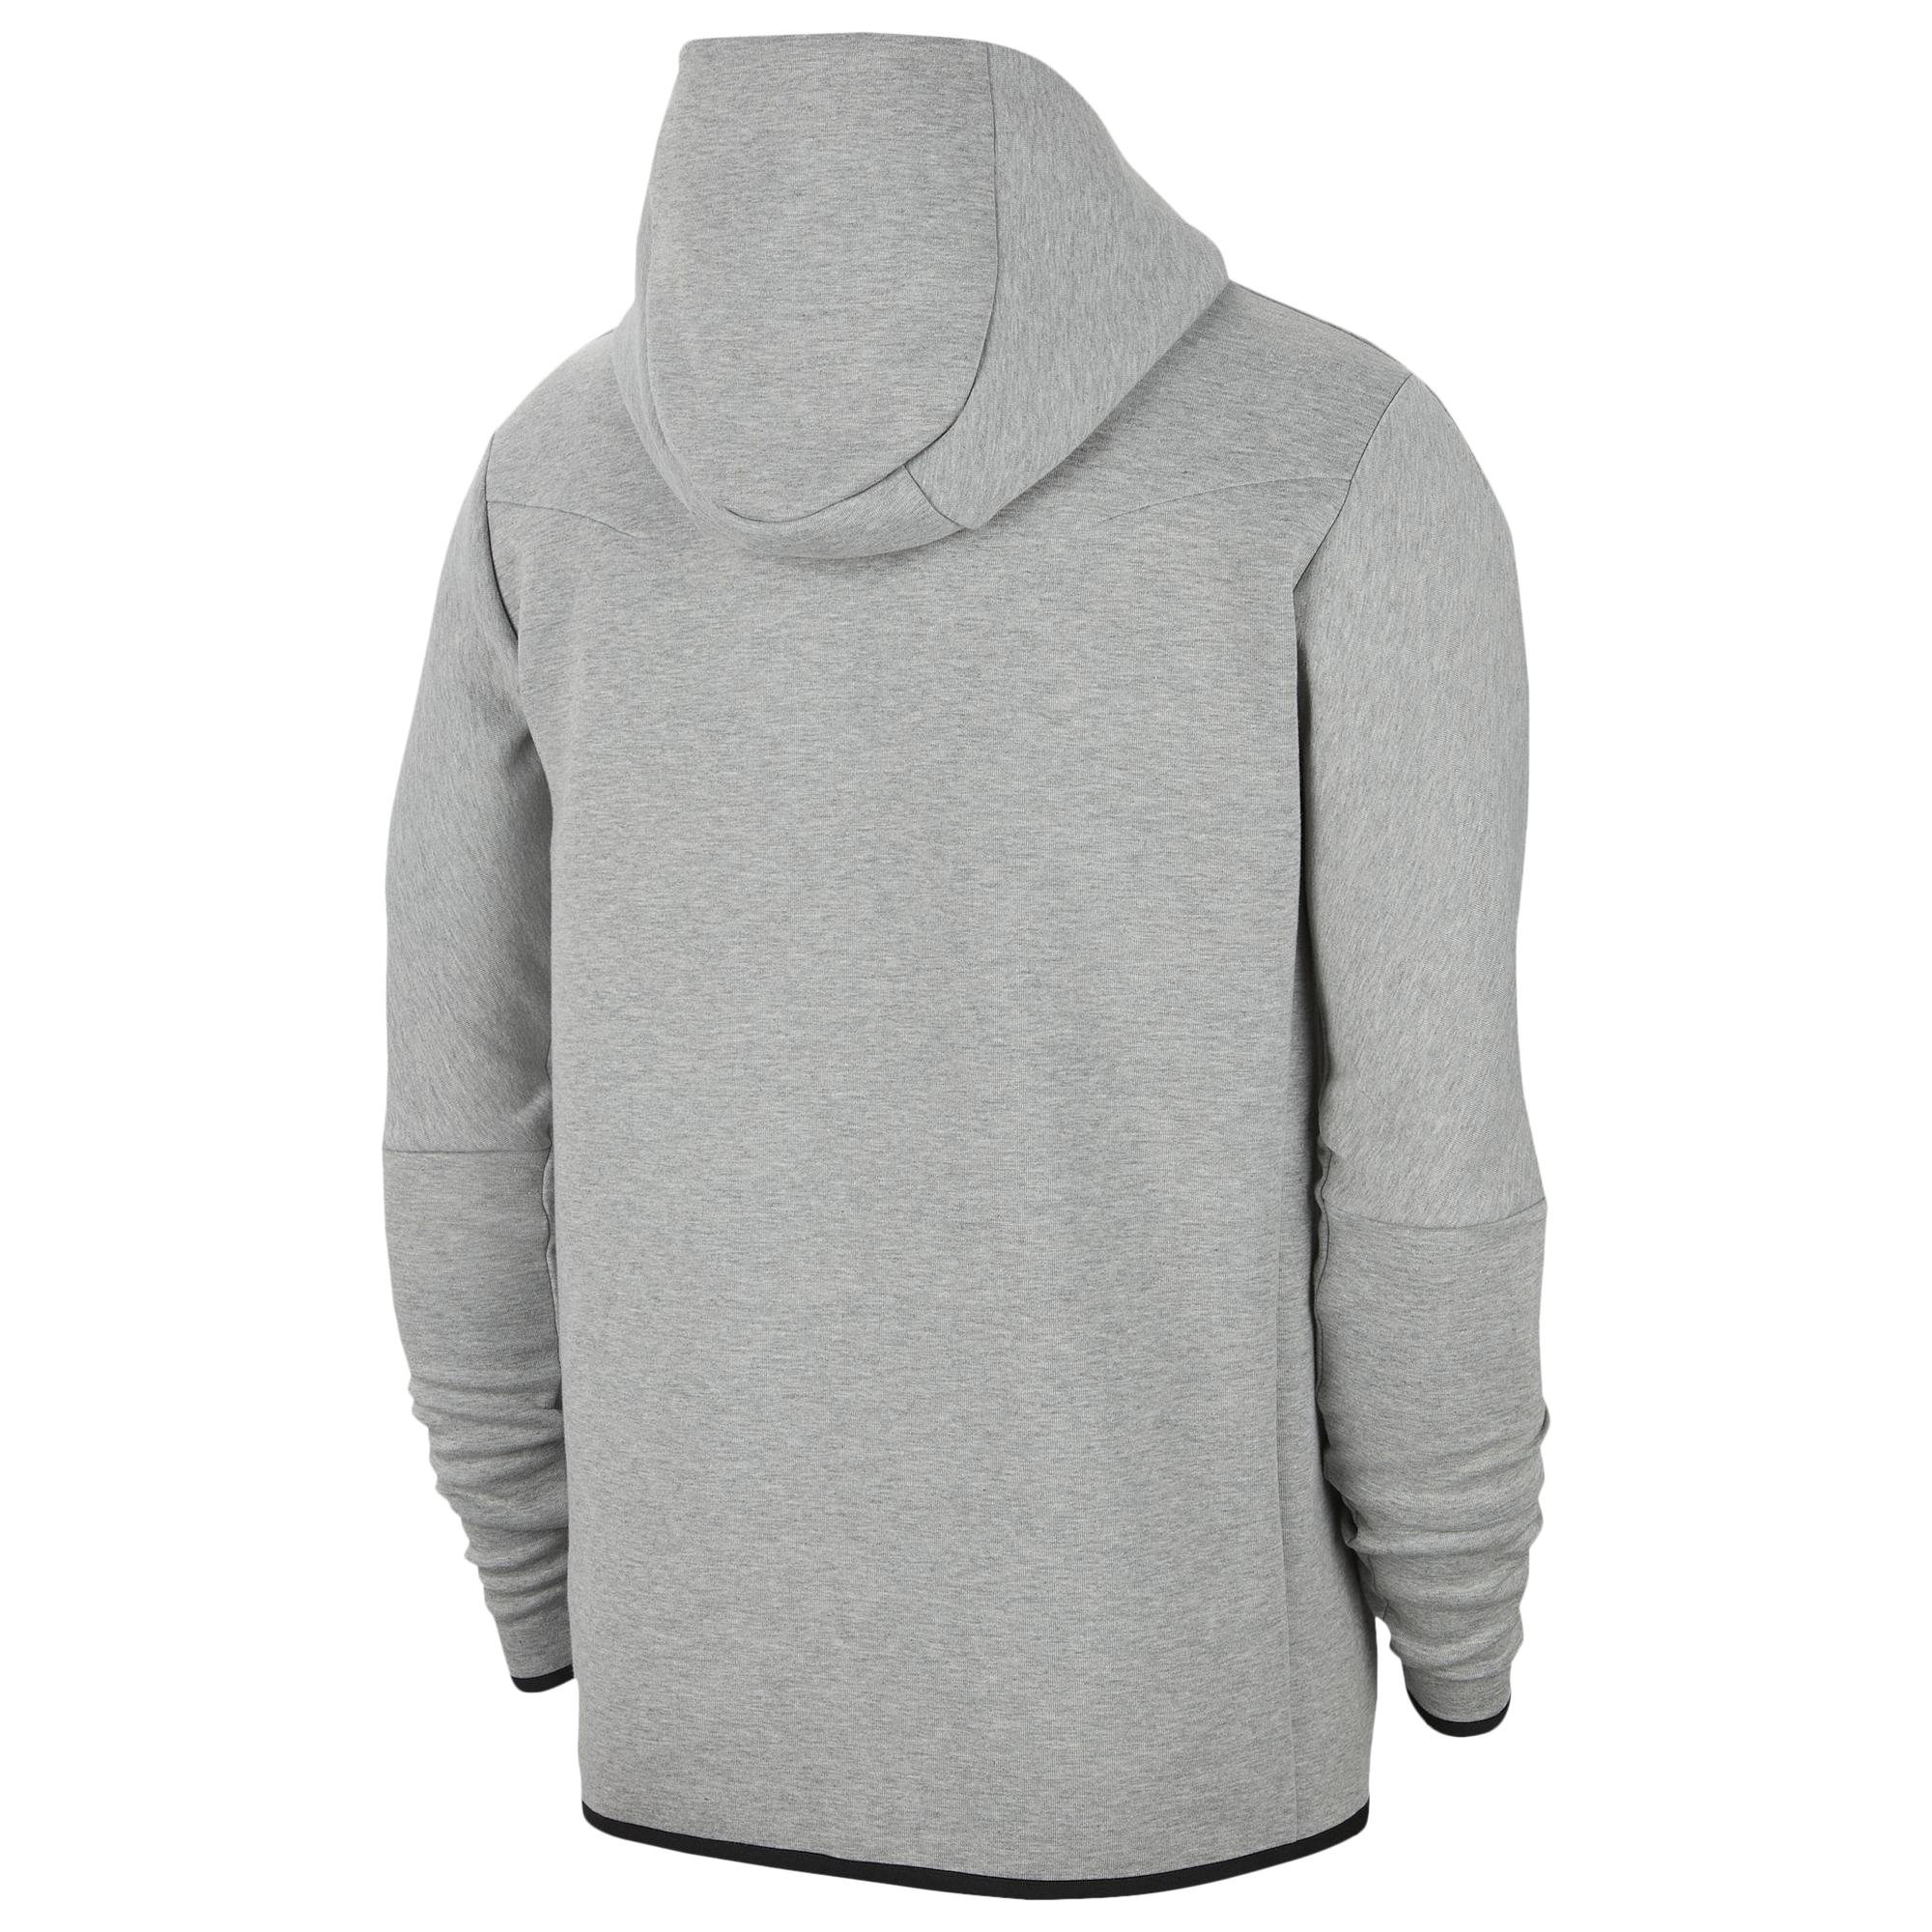 Nike Tech Fleece Full Zip Hoodie in Grey (Gray) for Men - Save 49% - Lyst